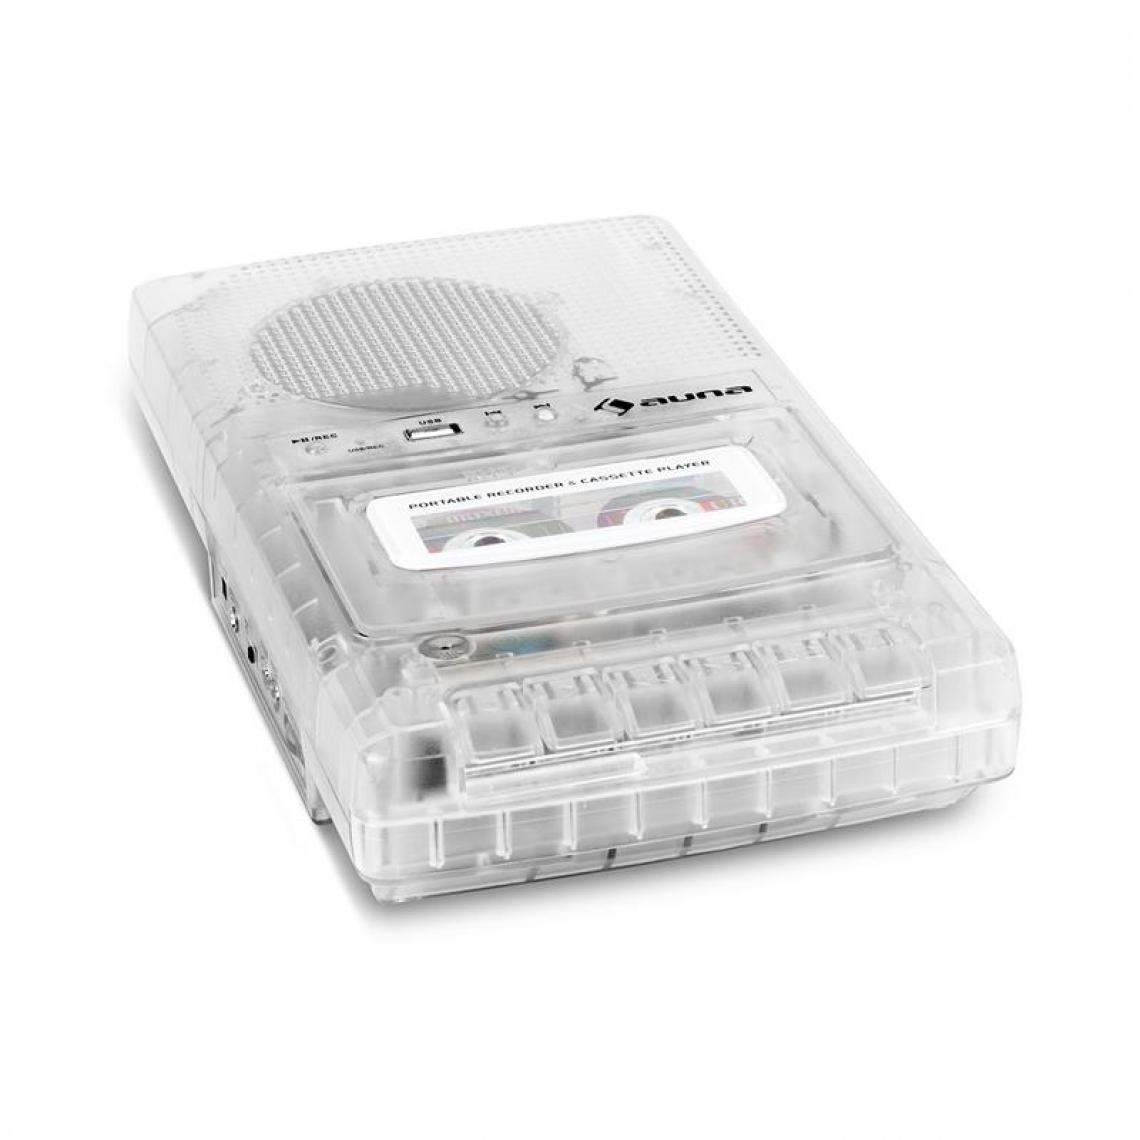 Auna - ClearTech magnétophone à cassettes dictaphone USB MP3 mobile transparent auna - Radio